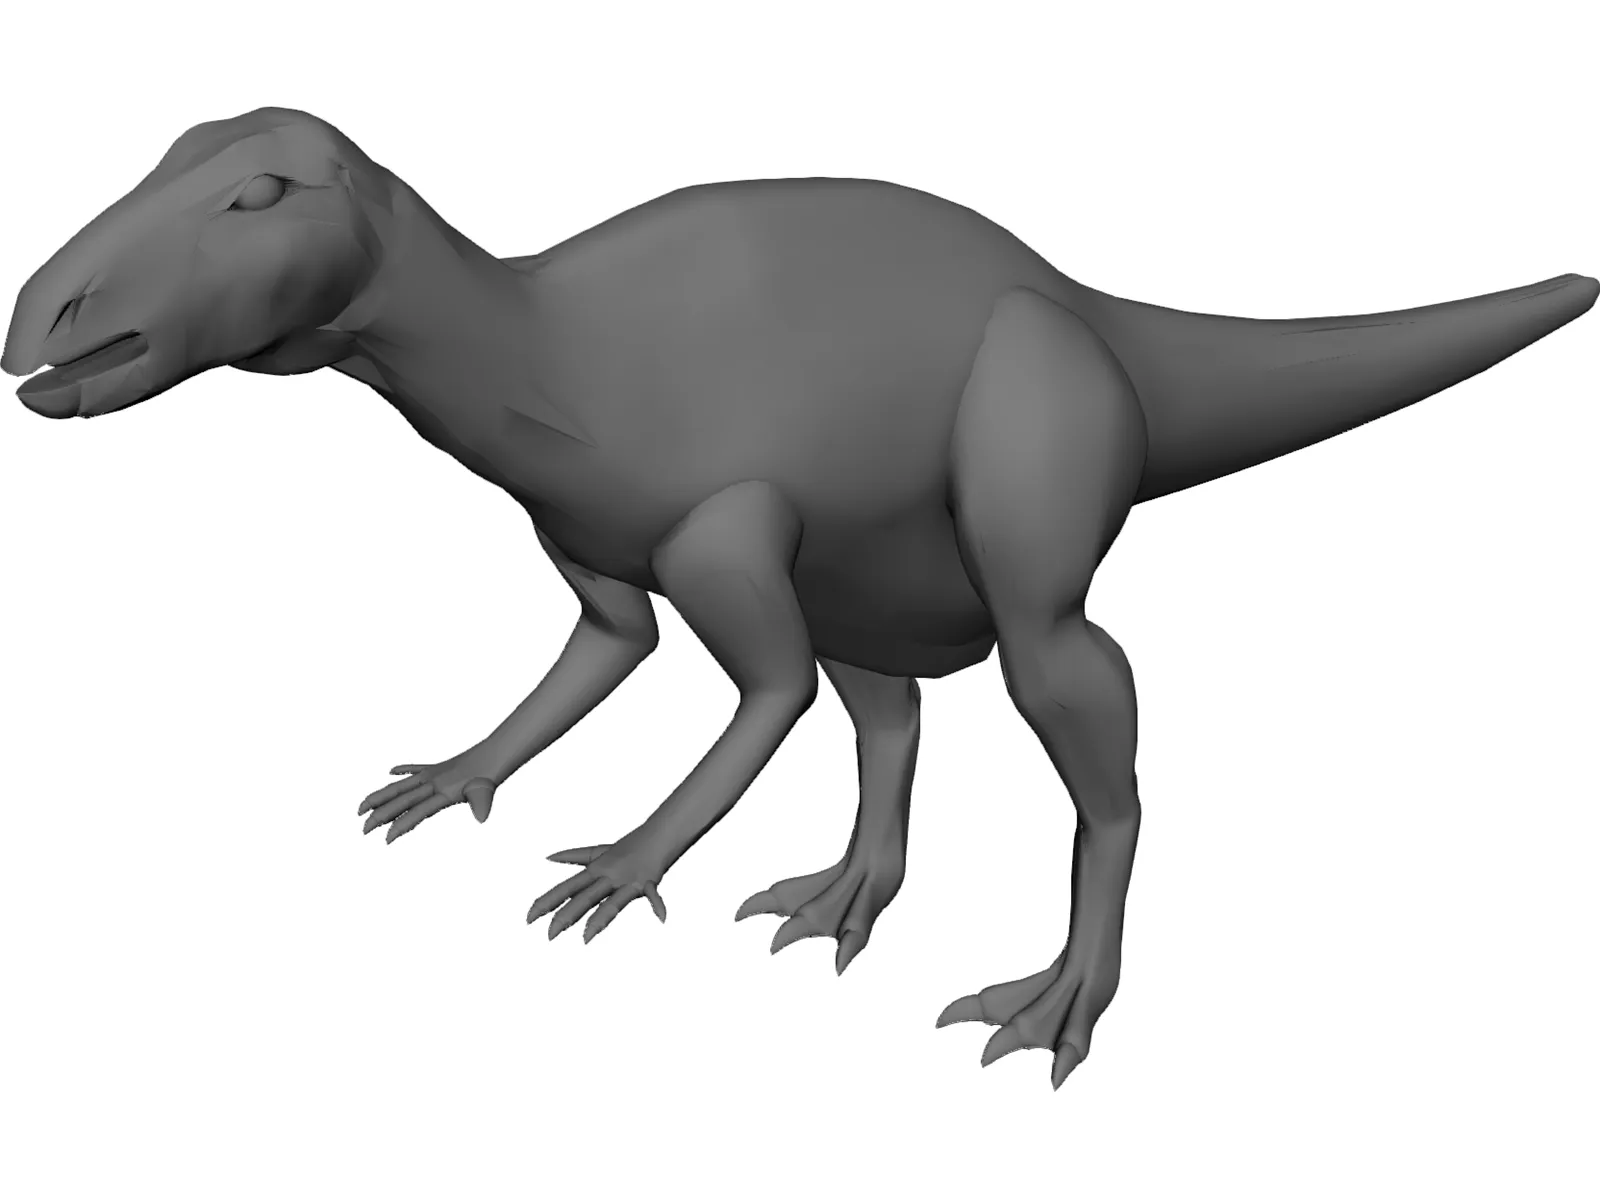 Iguanadon 3D Model